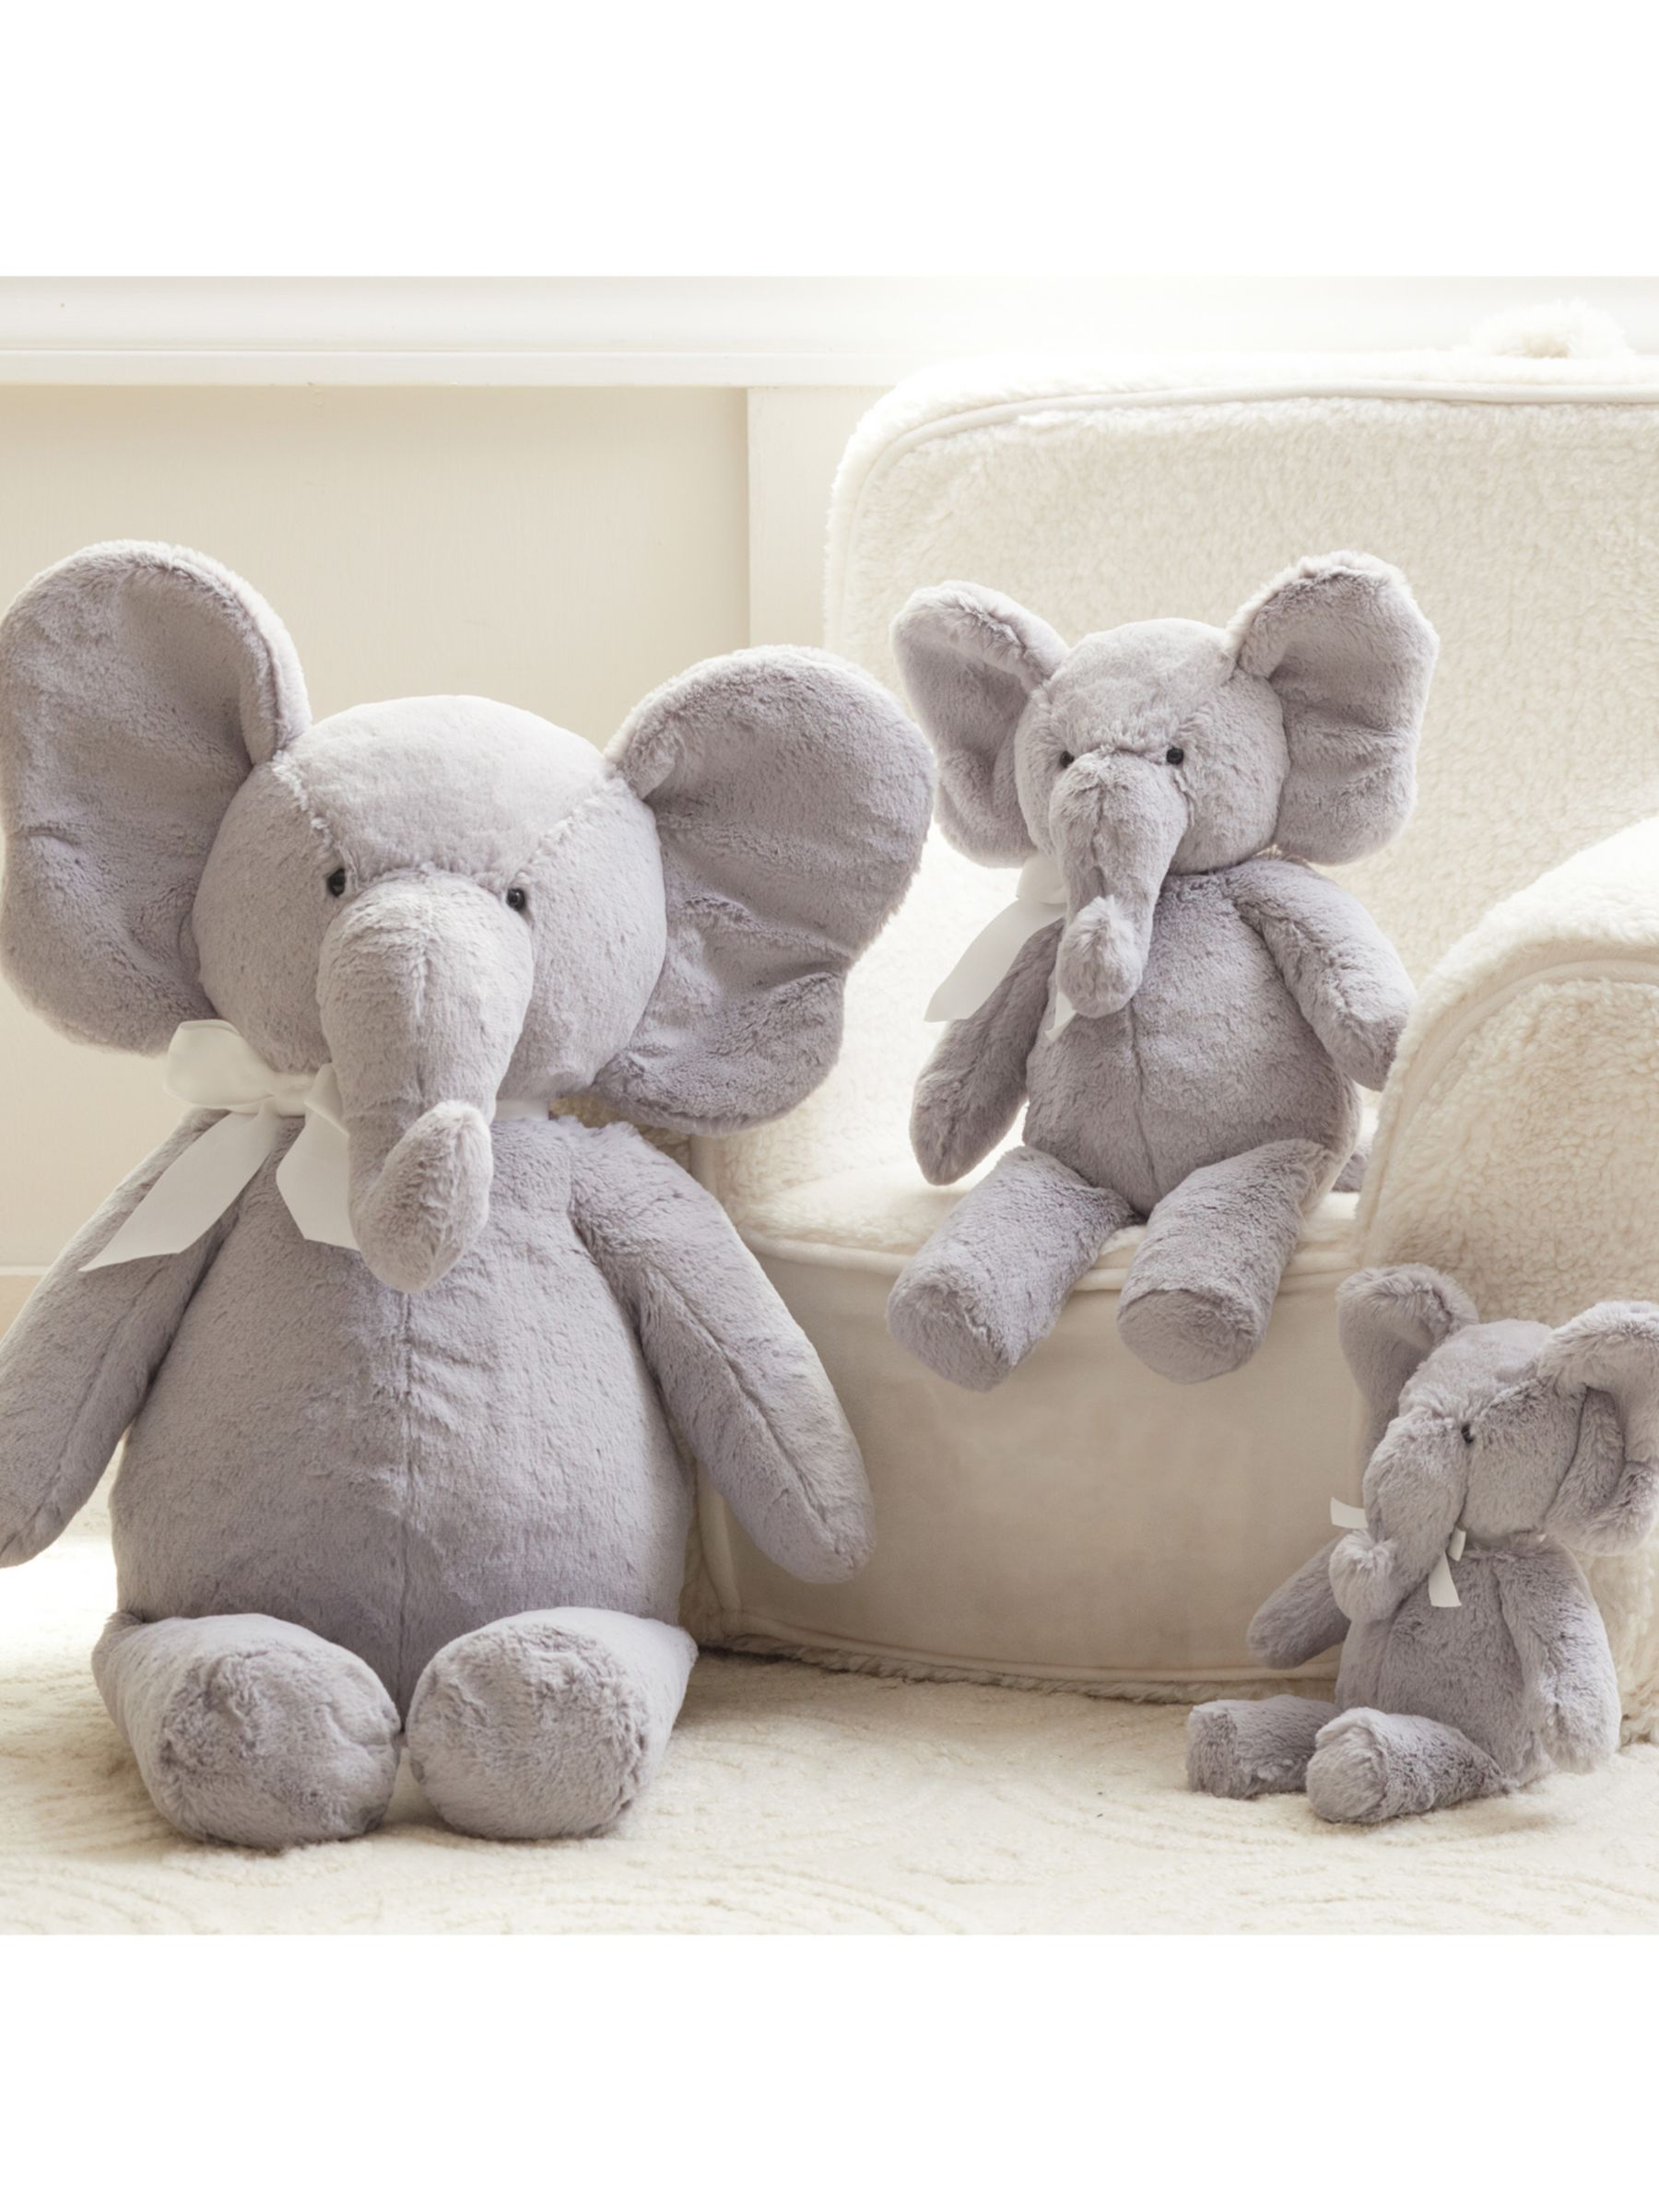 Pottery Barn Kids Plush Elephant Soft Toy At John Lewis Partners